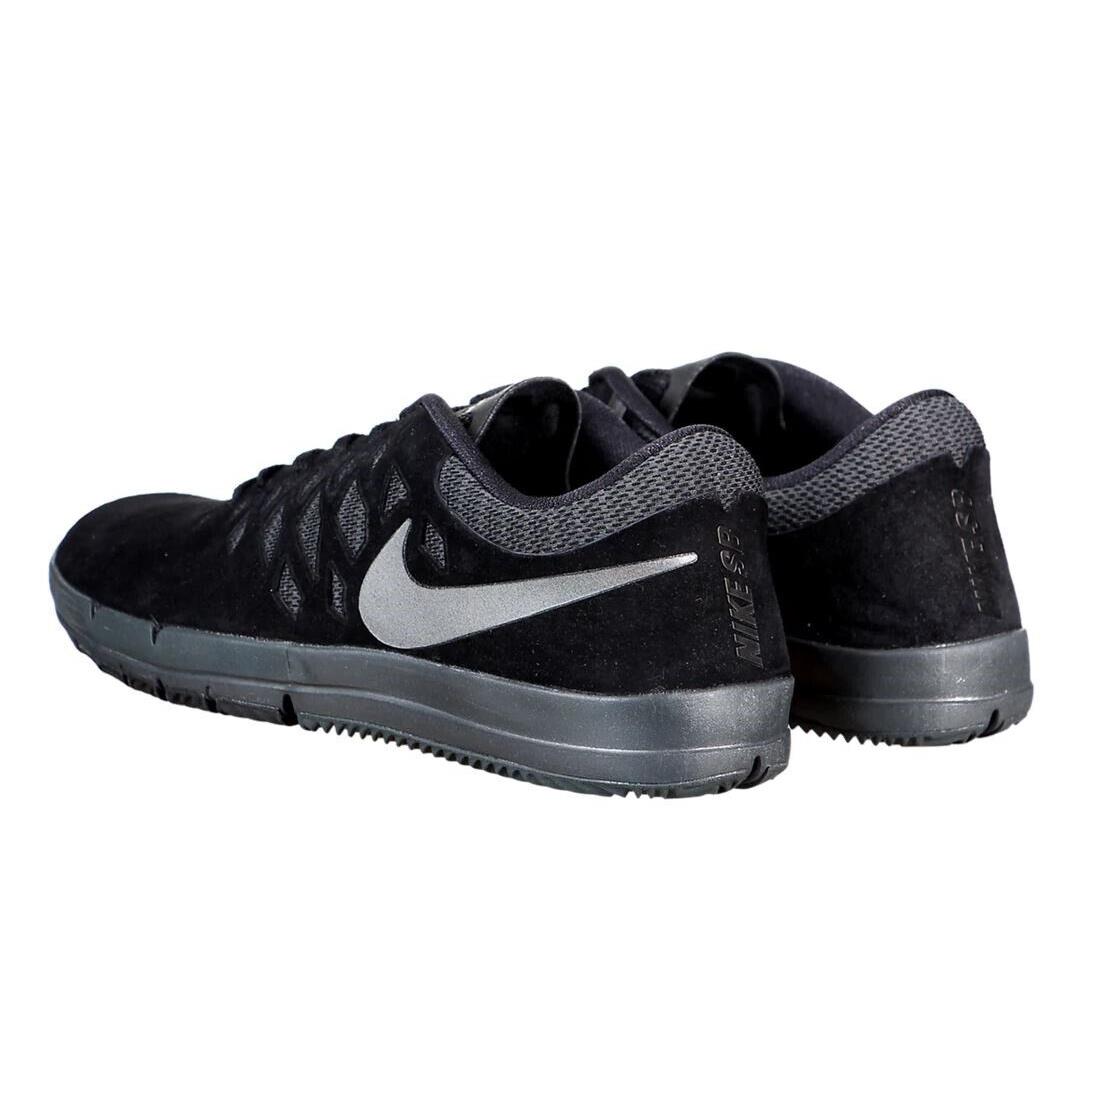 Nike shoes Free Premium - Black/Black-Anthracite 0